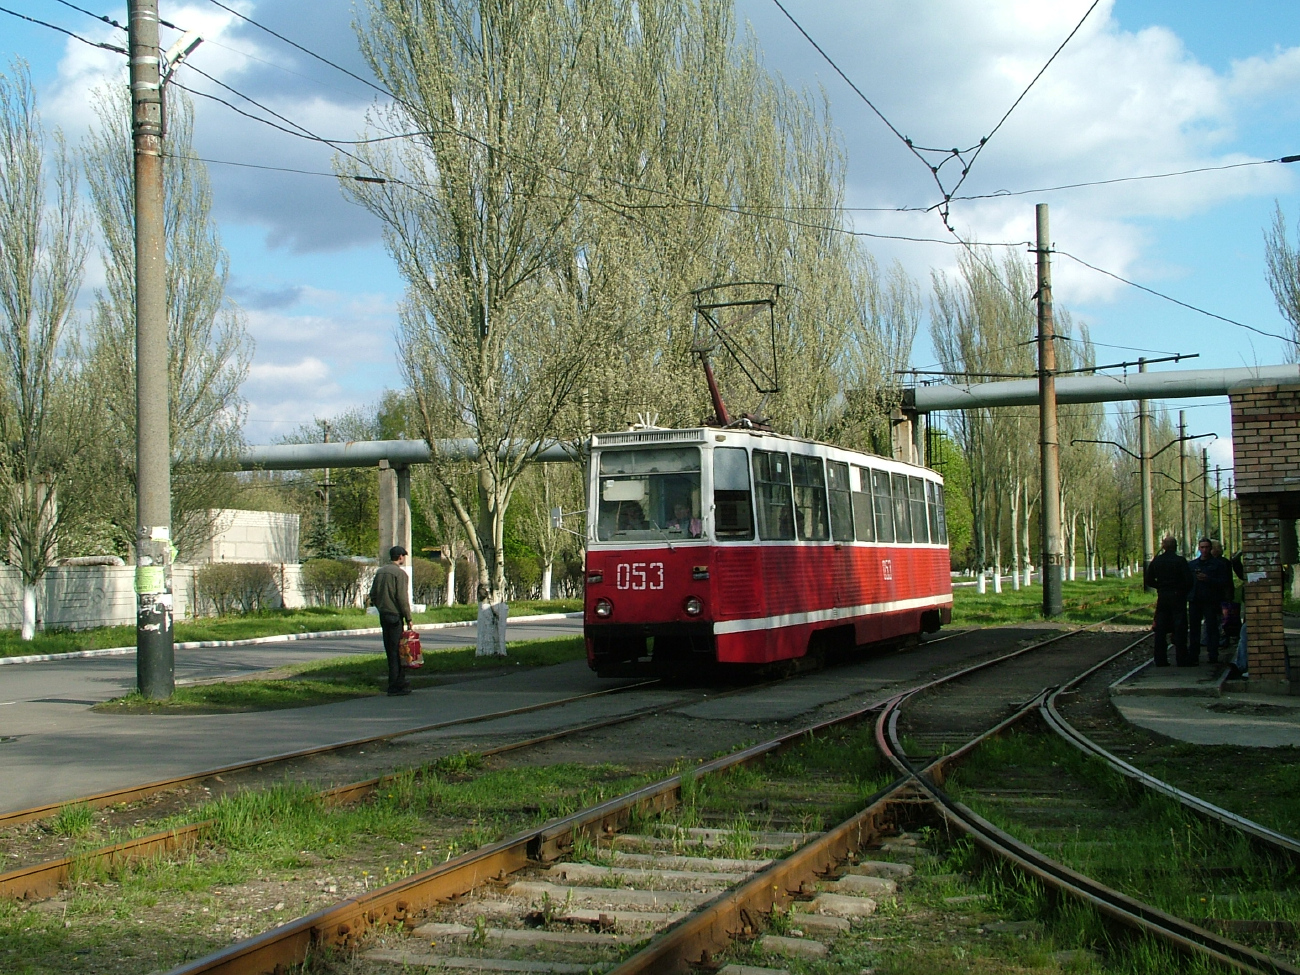 Avdiivka, 71-605 (KTM-5M3) č. 053; Avdiivka — Lines and Infrastructure